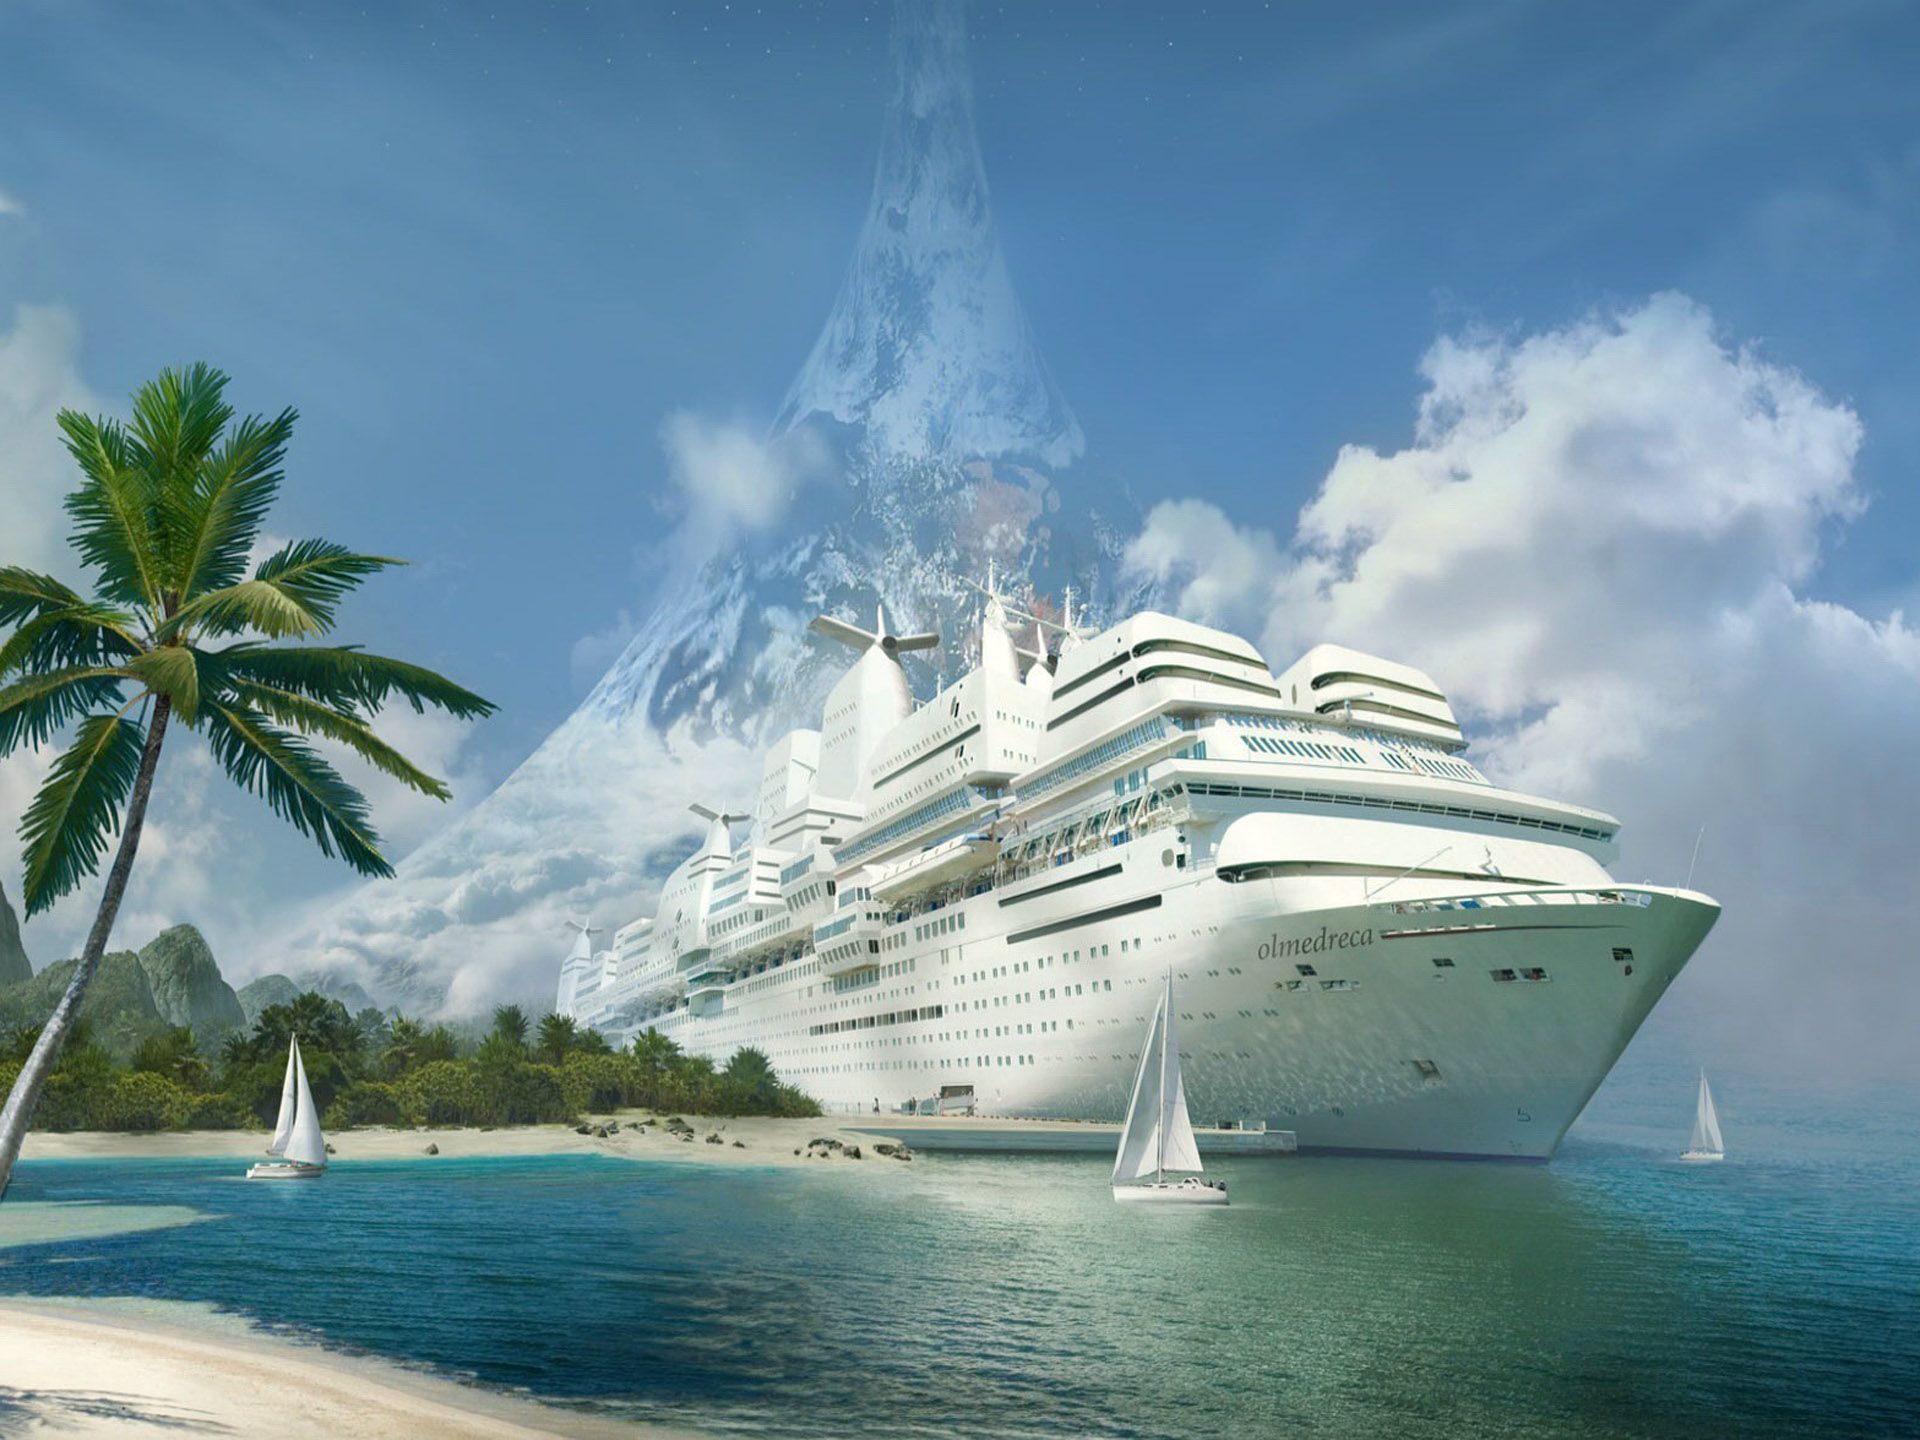 Very Beautiful Scenery Cruise Ship. Carnival cruise